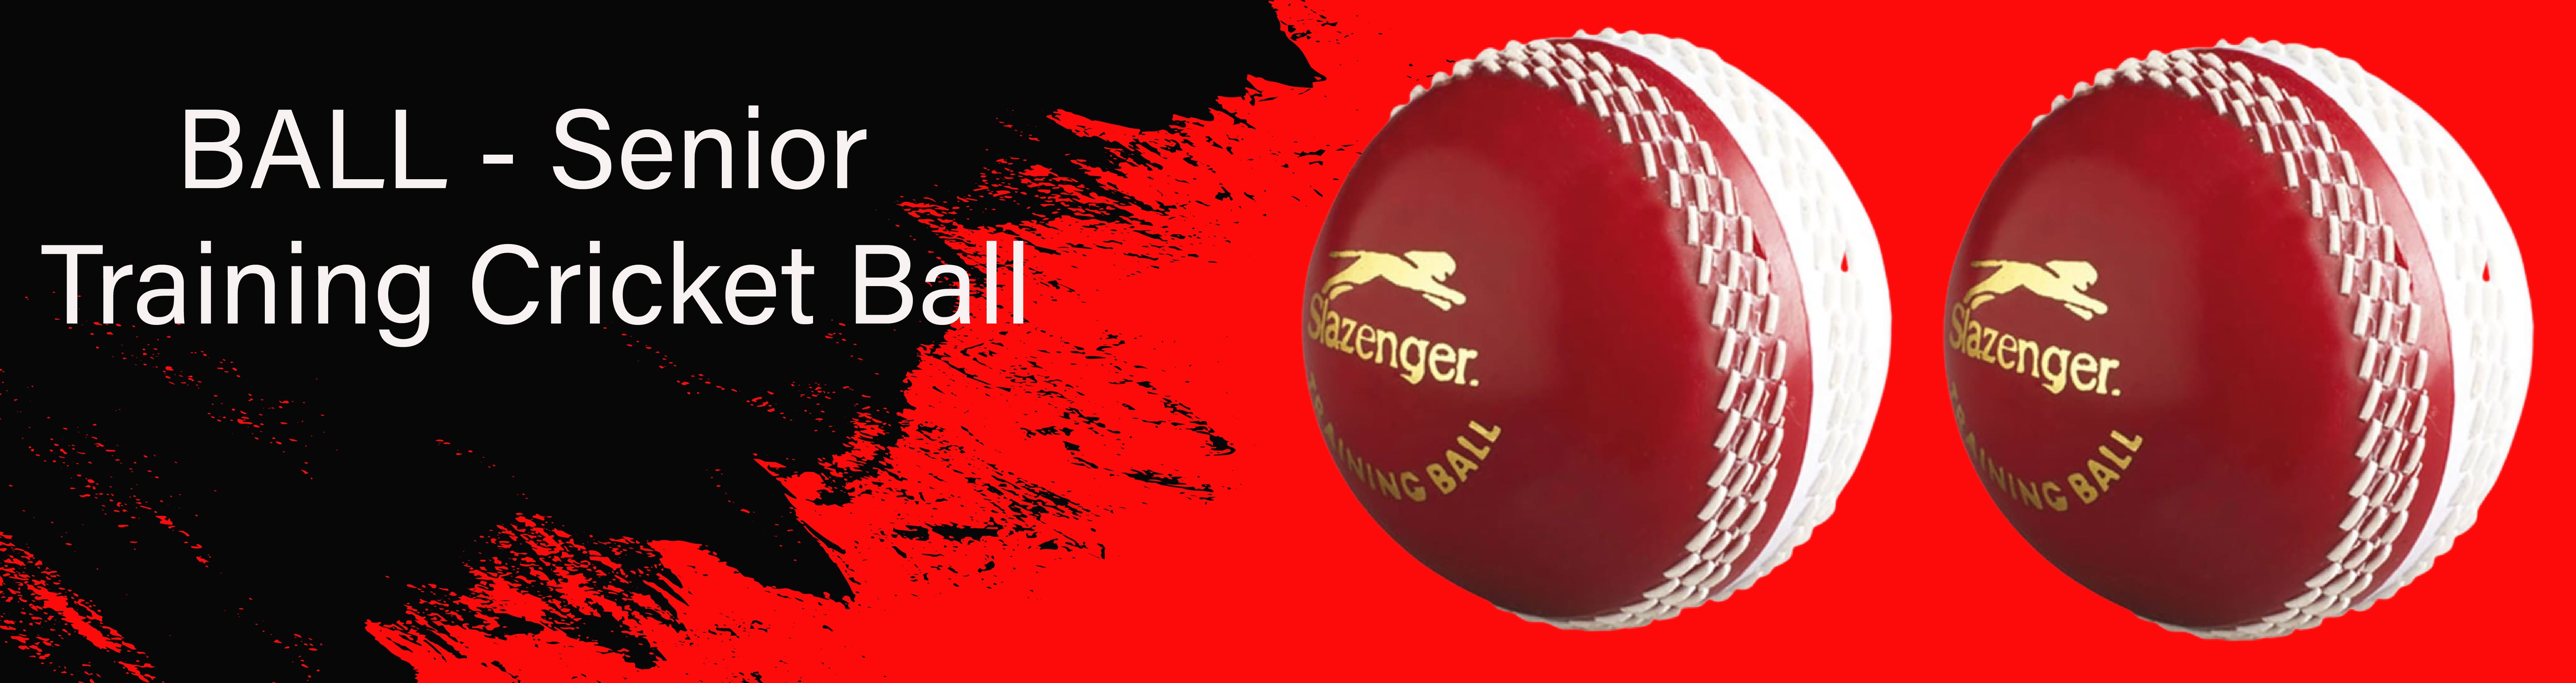 BALL - Senior Training Cricket Ball -